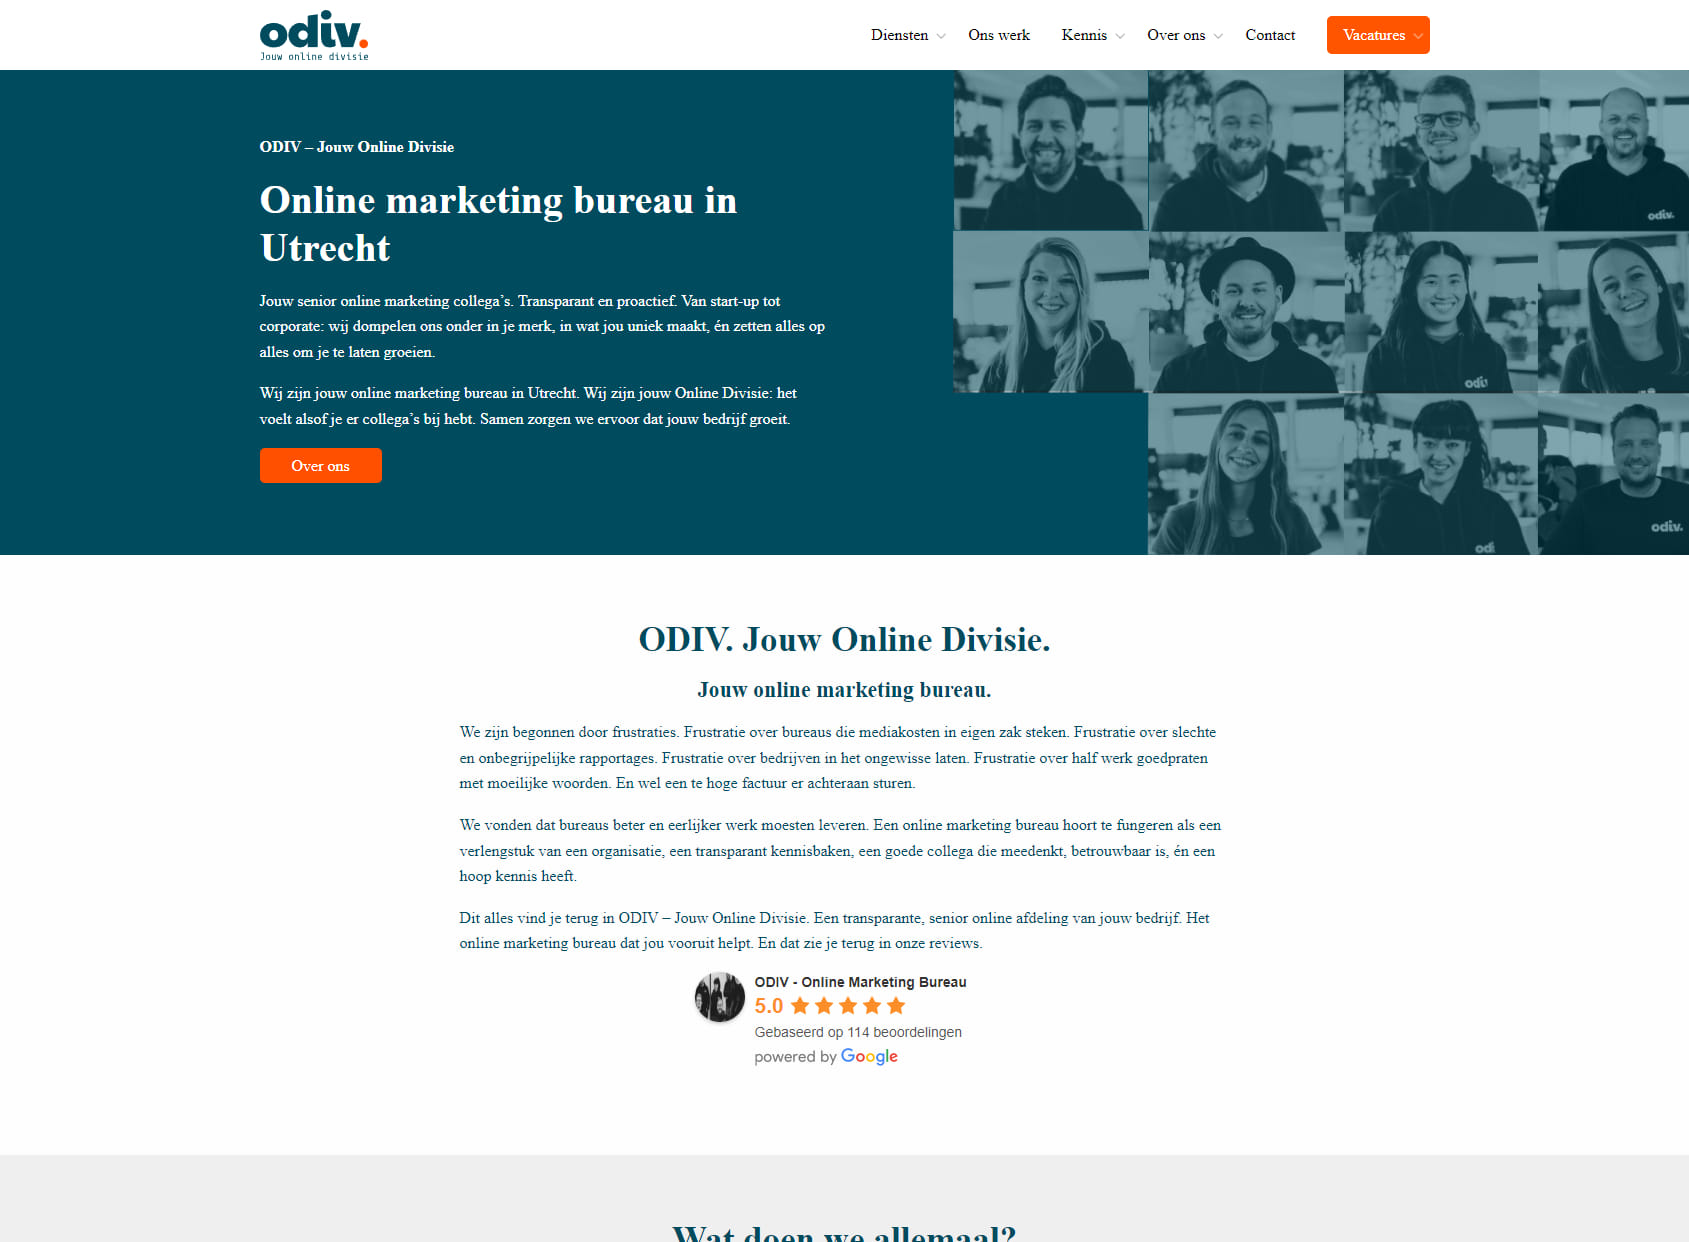 ODIV - Online Marketing Bureau